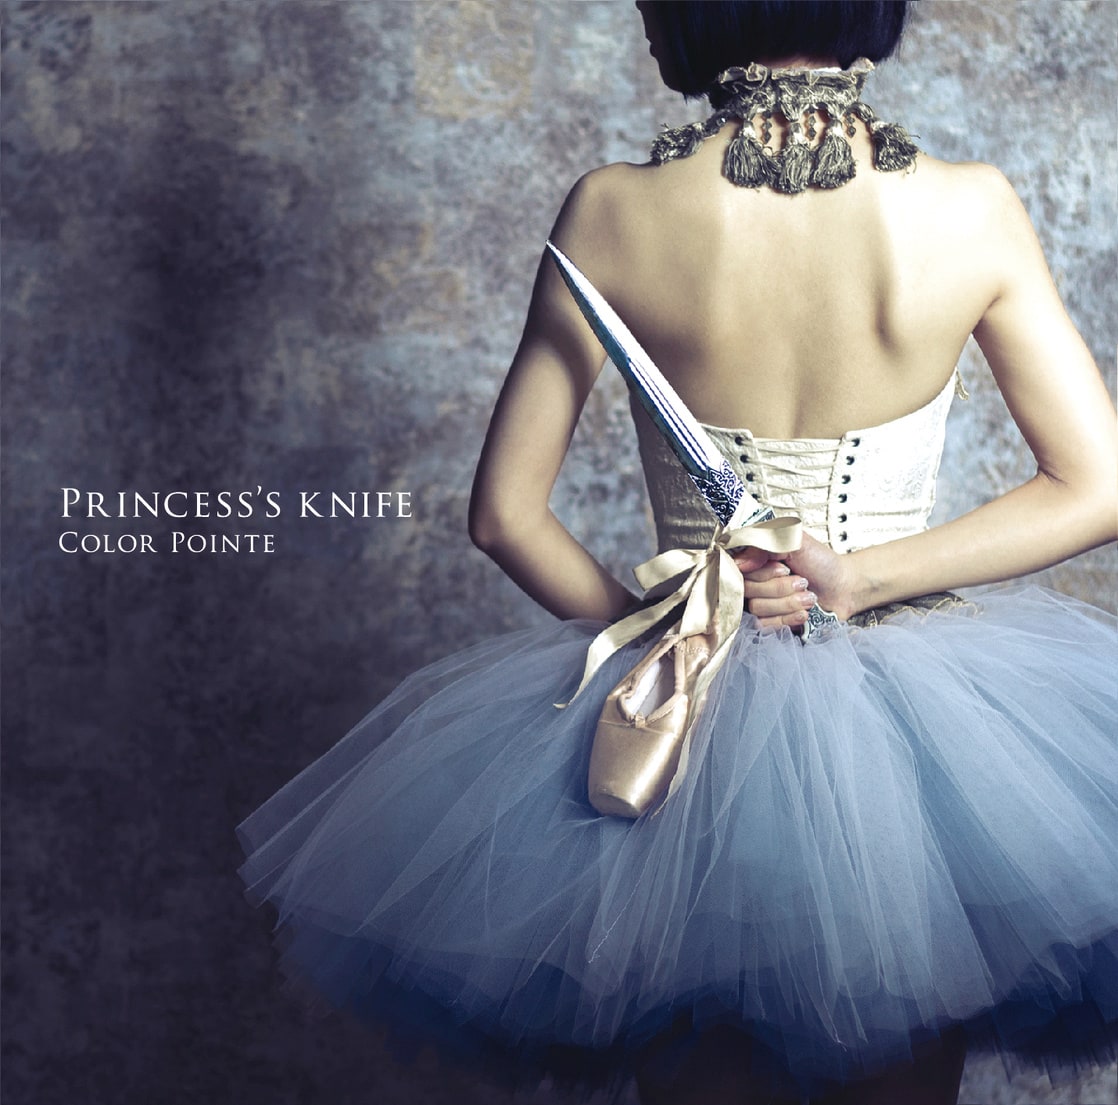 Princess's knife